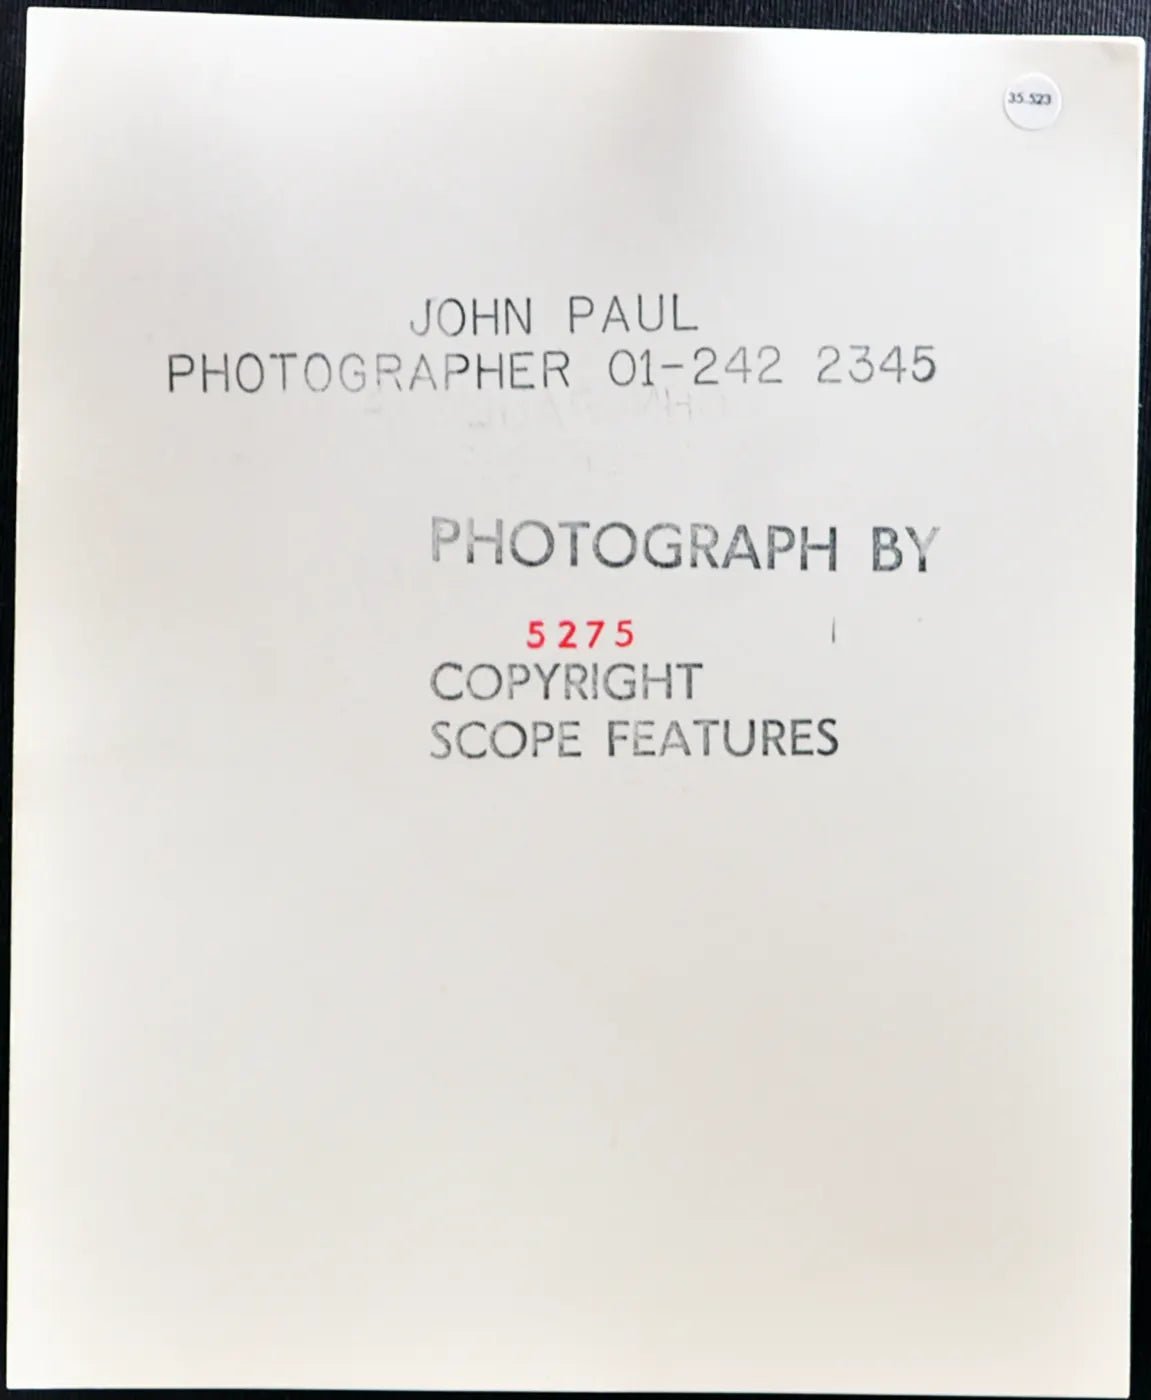 Gillian Duxbury Modella anni 80 Ft 35523 - Stampa 20x25 cm - Farabola Stampa ai sali d'argento